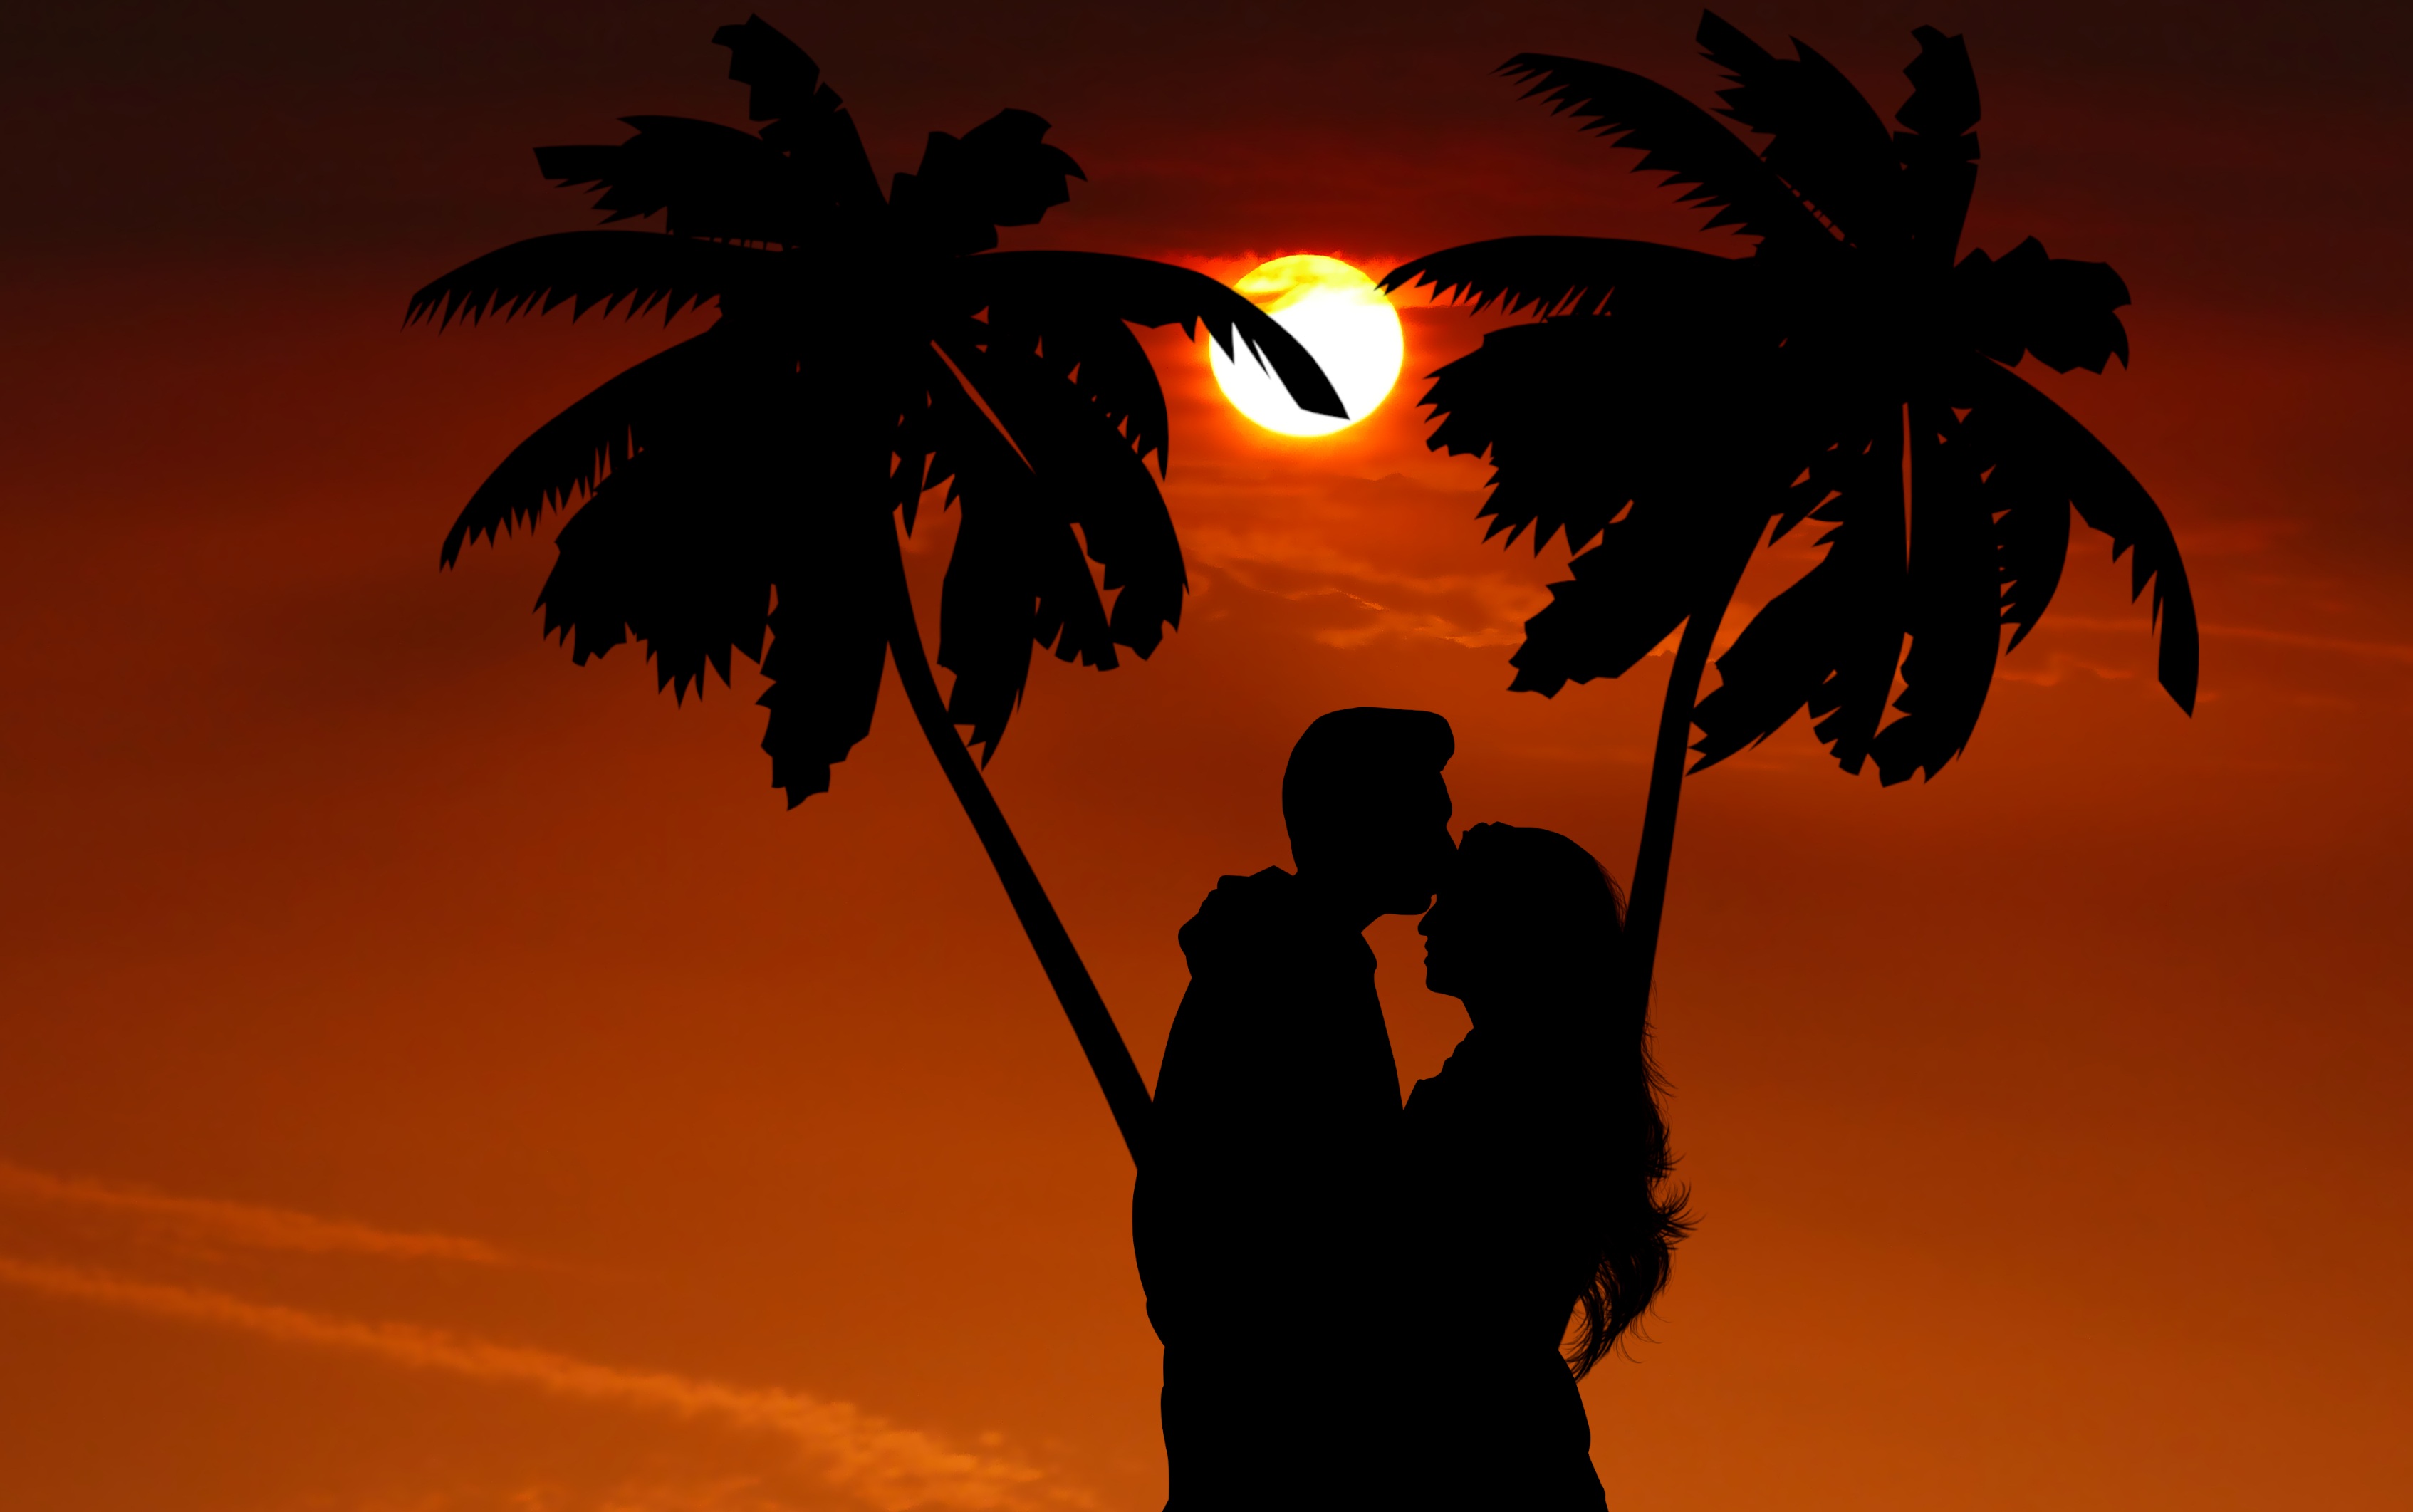 couple, romance, love, embrace, silhouettes, pair, night, palms